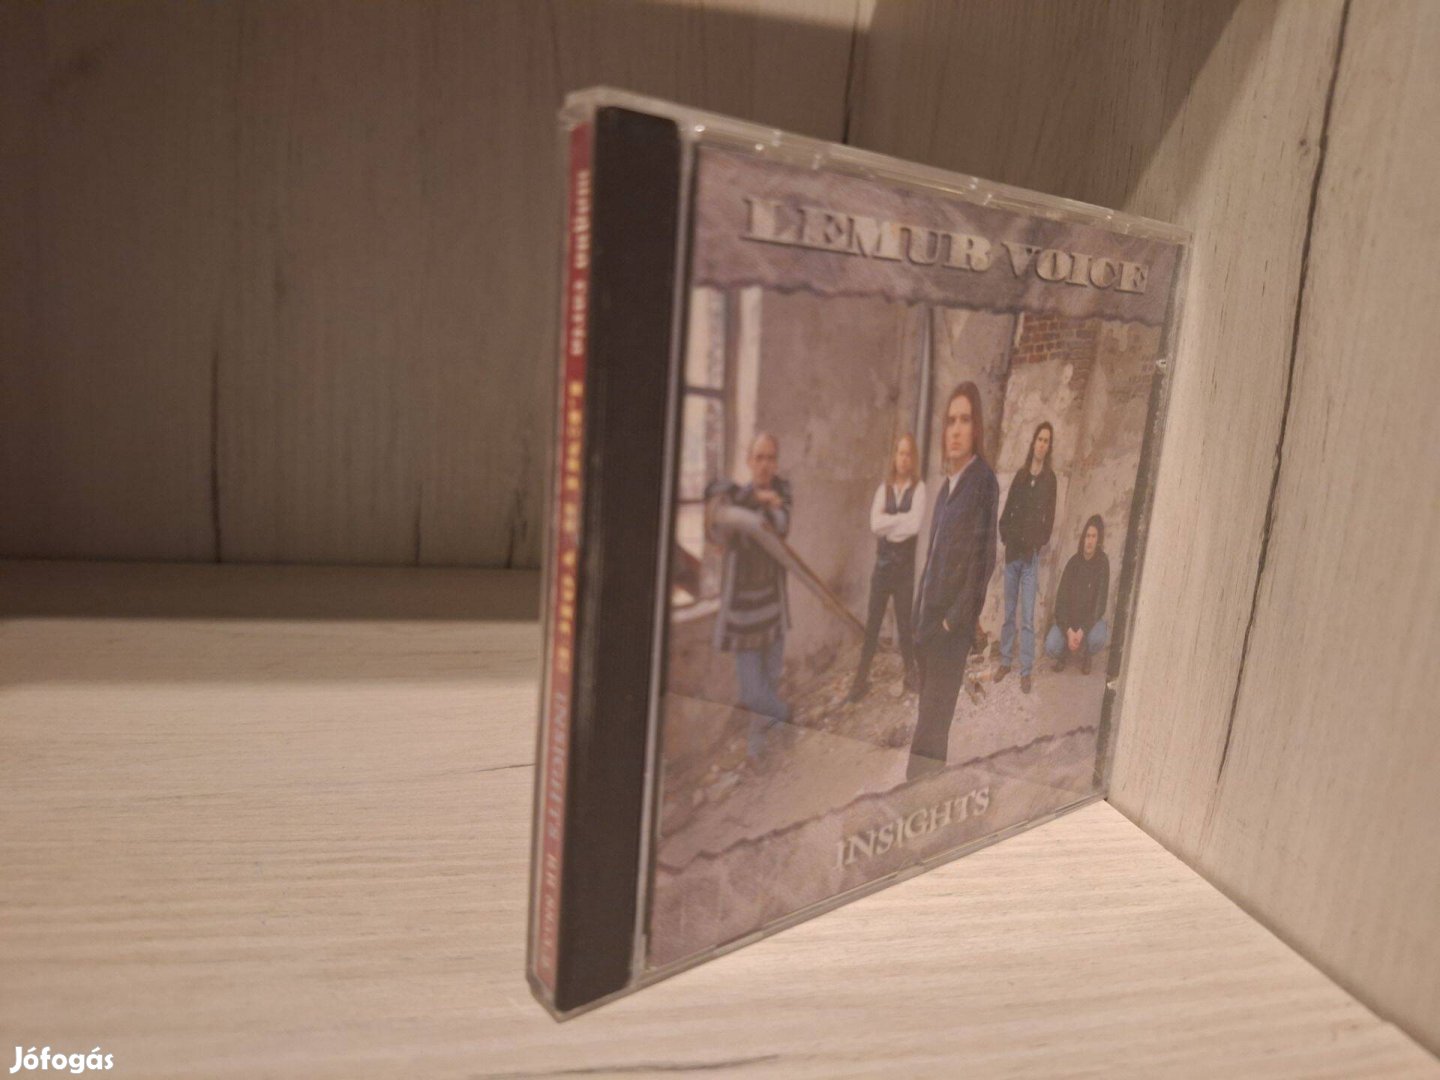 Lemur Voice - Insights CD